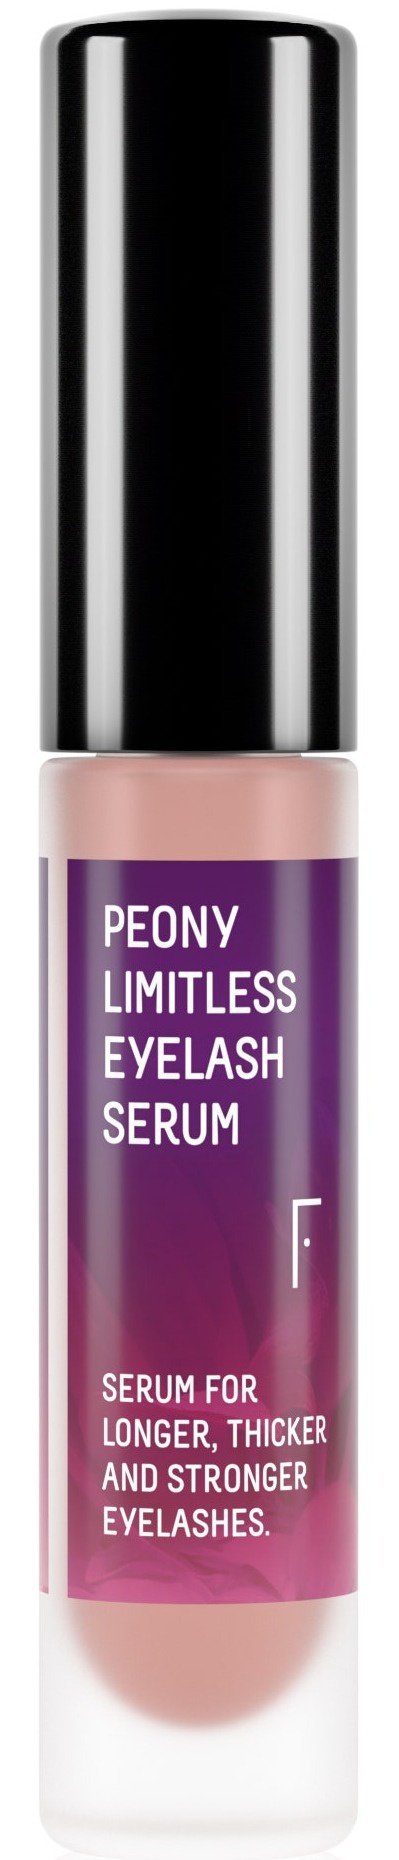 Freshly Cosmetics Peony Limitless Eyelash Serum